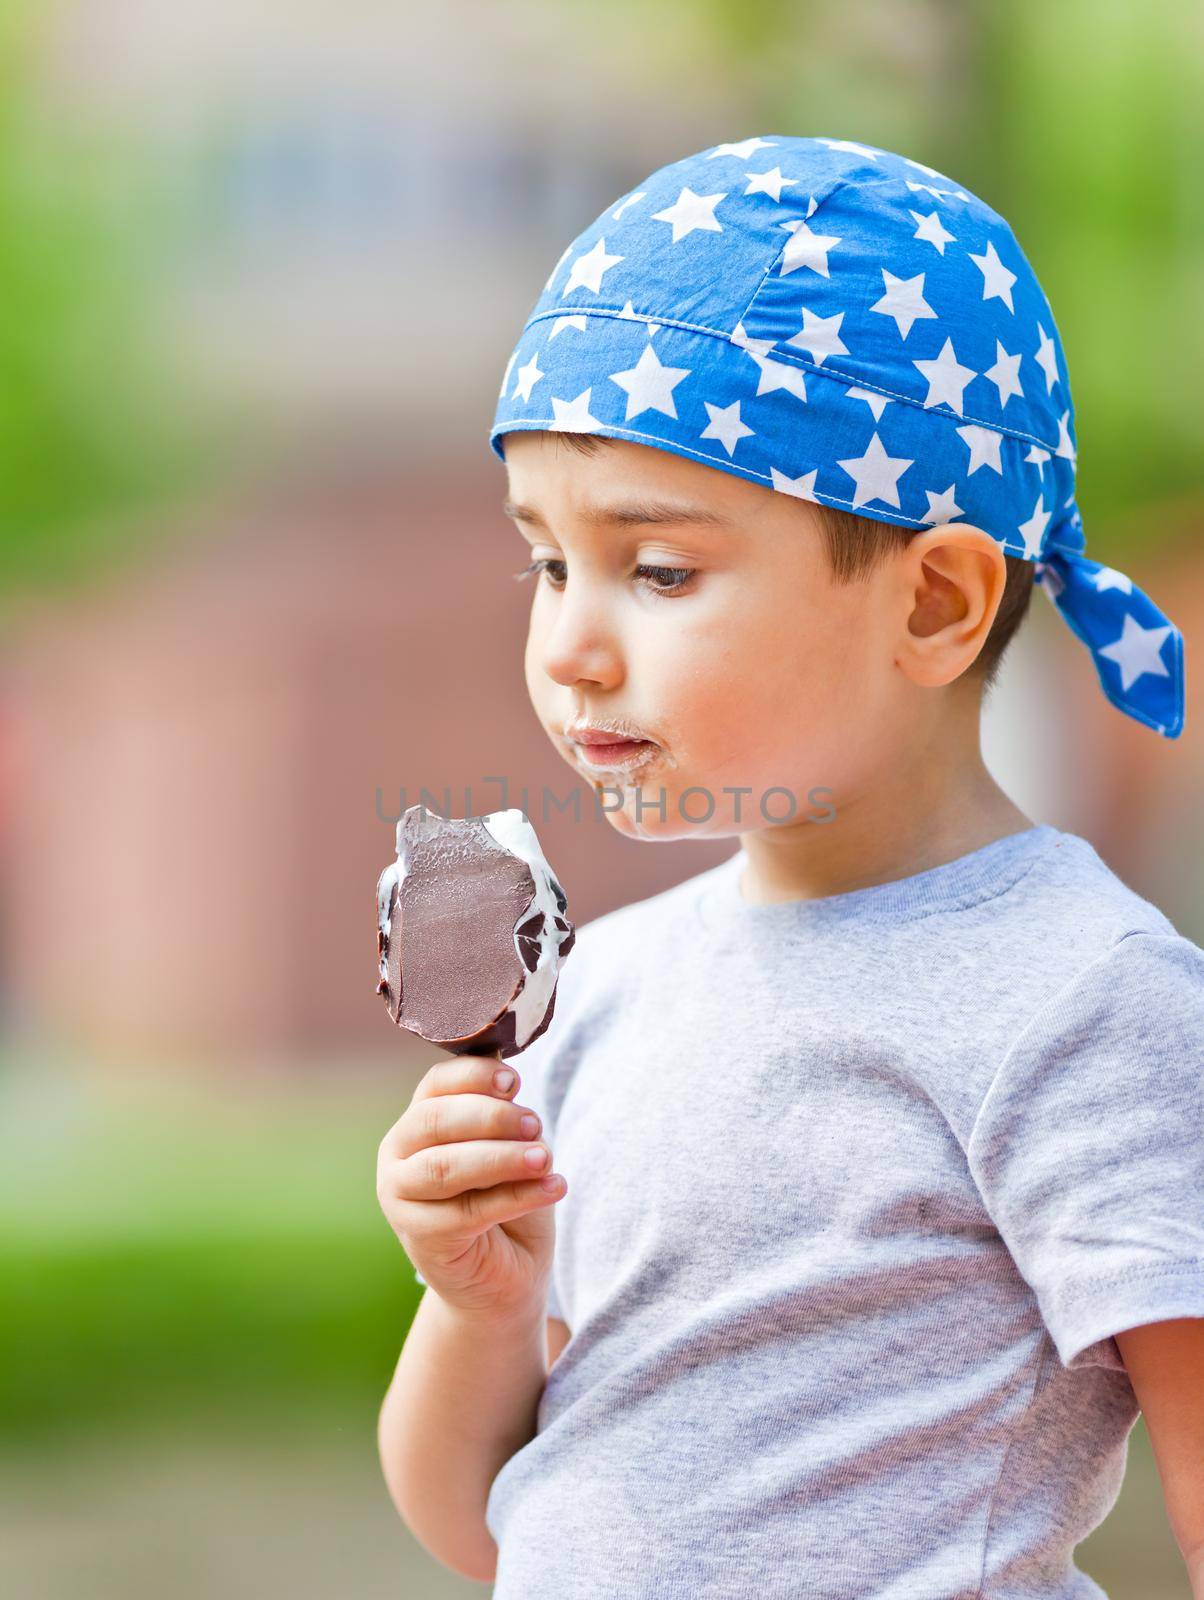 Cute little boy in bandana eats ice cream